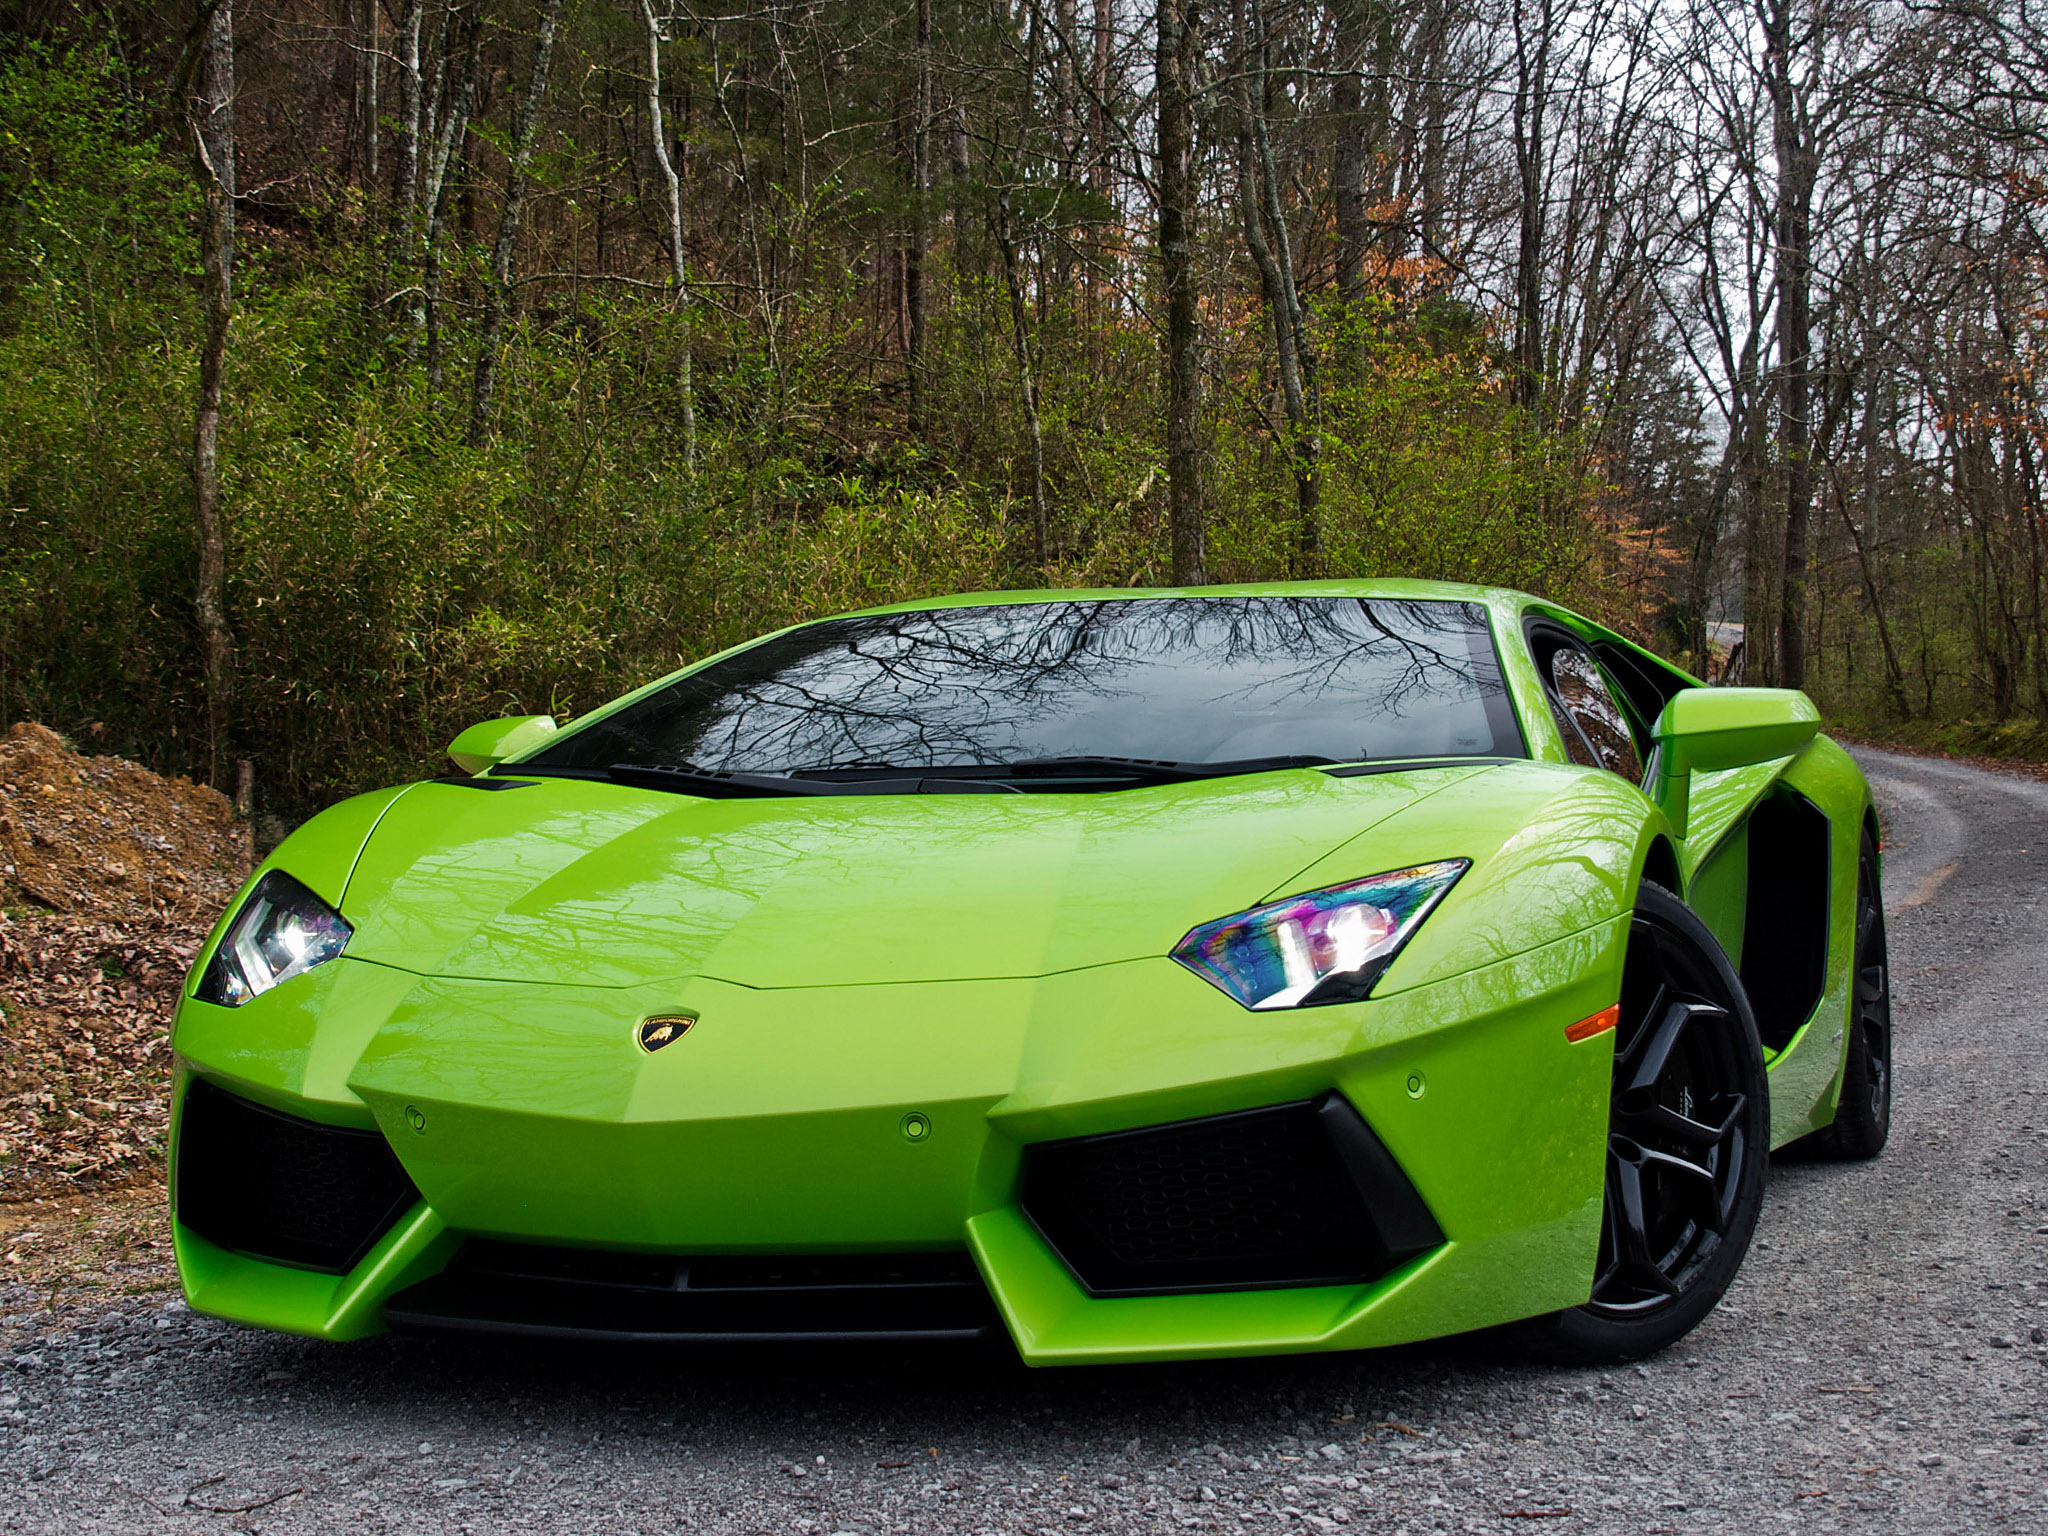 Car in pictures - car photo gallery » Lamborghini ...